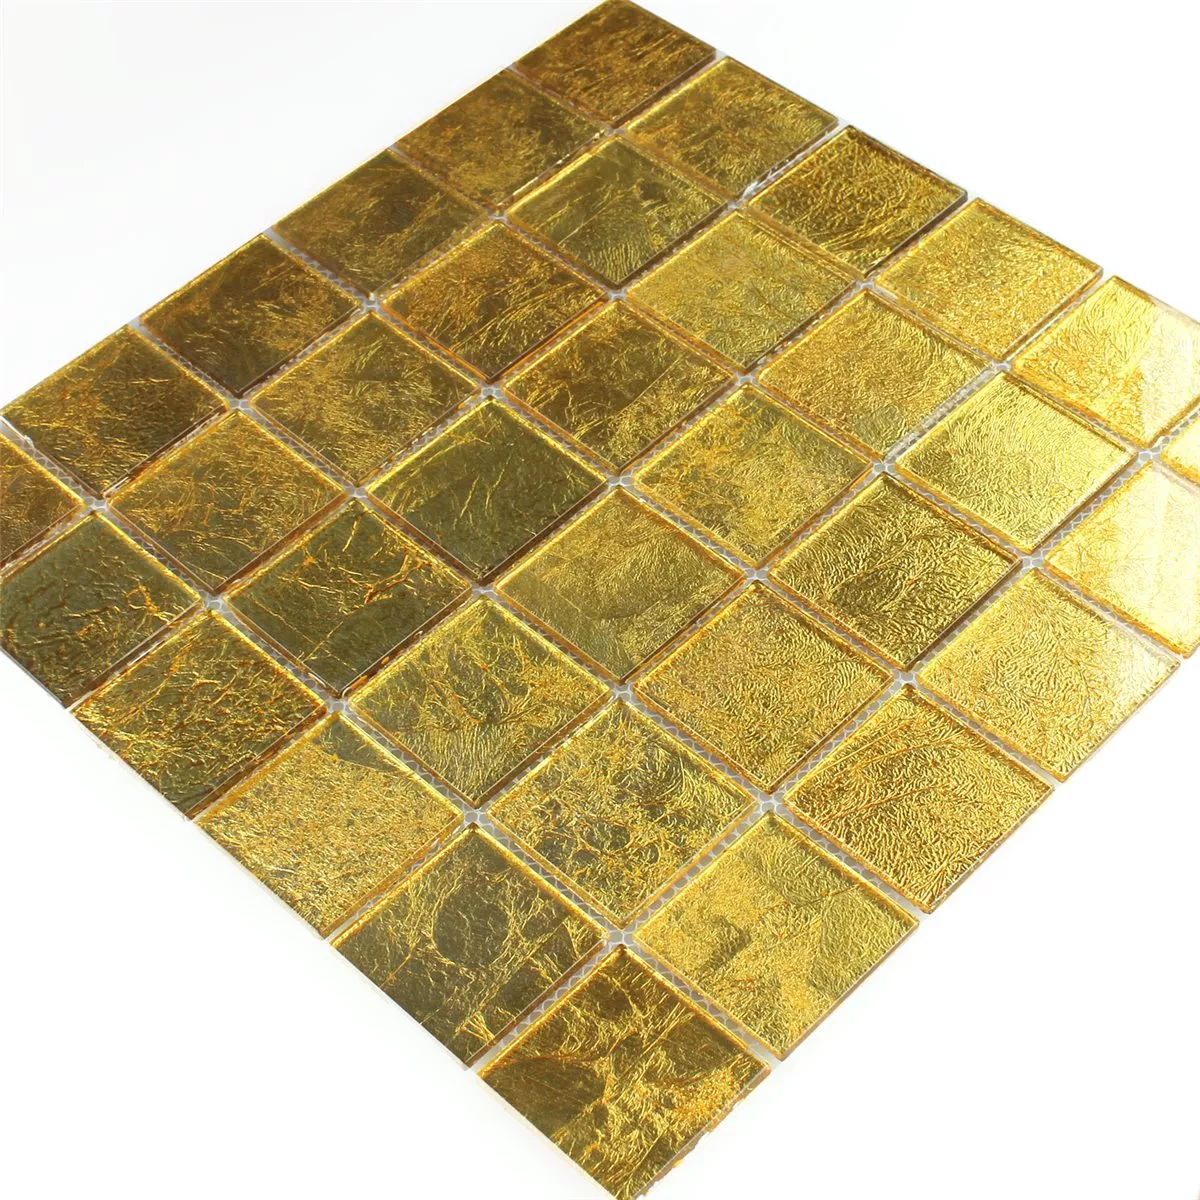 Sample Mosaic Tiles Glass Effect Gold 